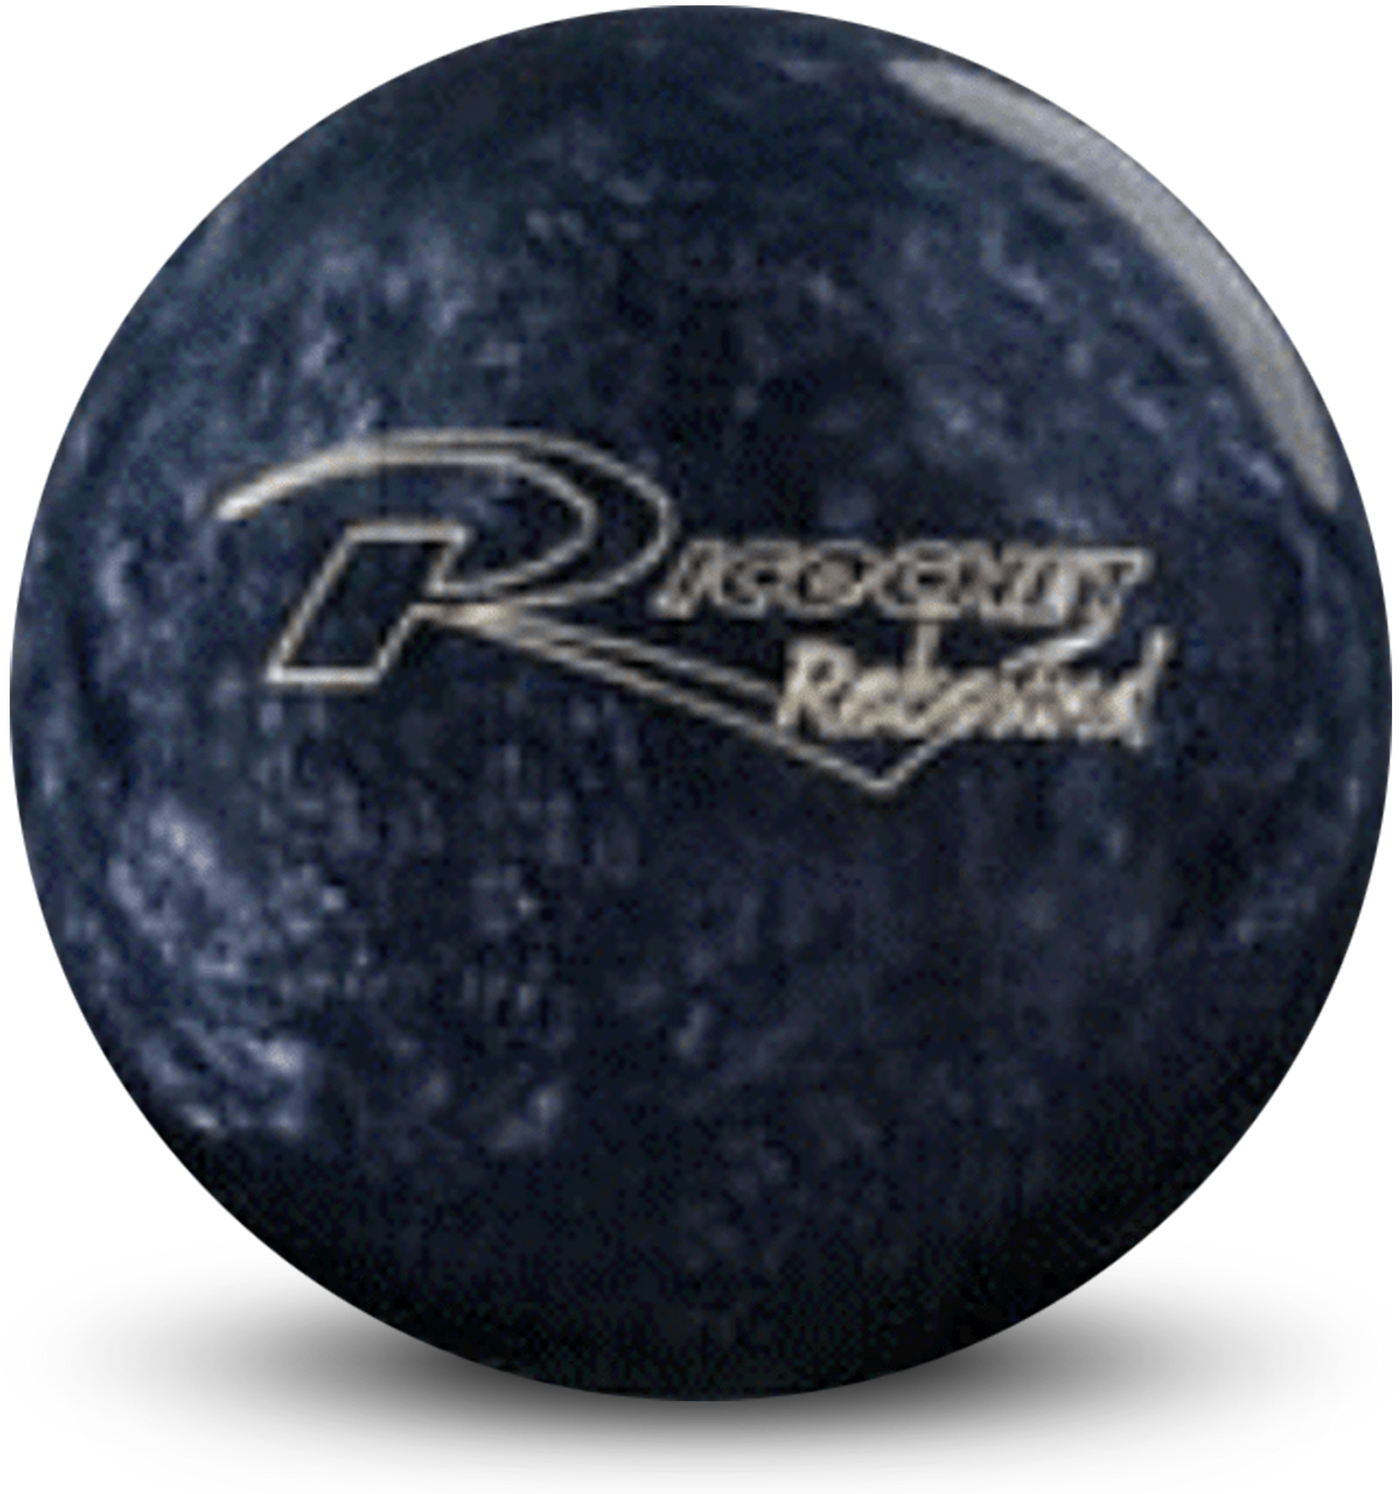 Reaction Ricochet Rebound Bowling Ball